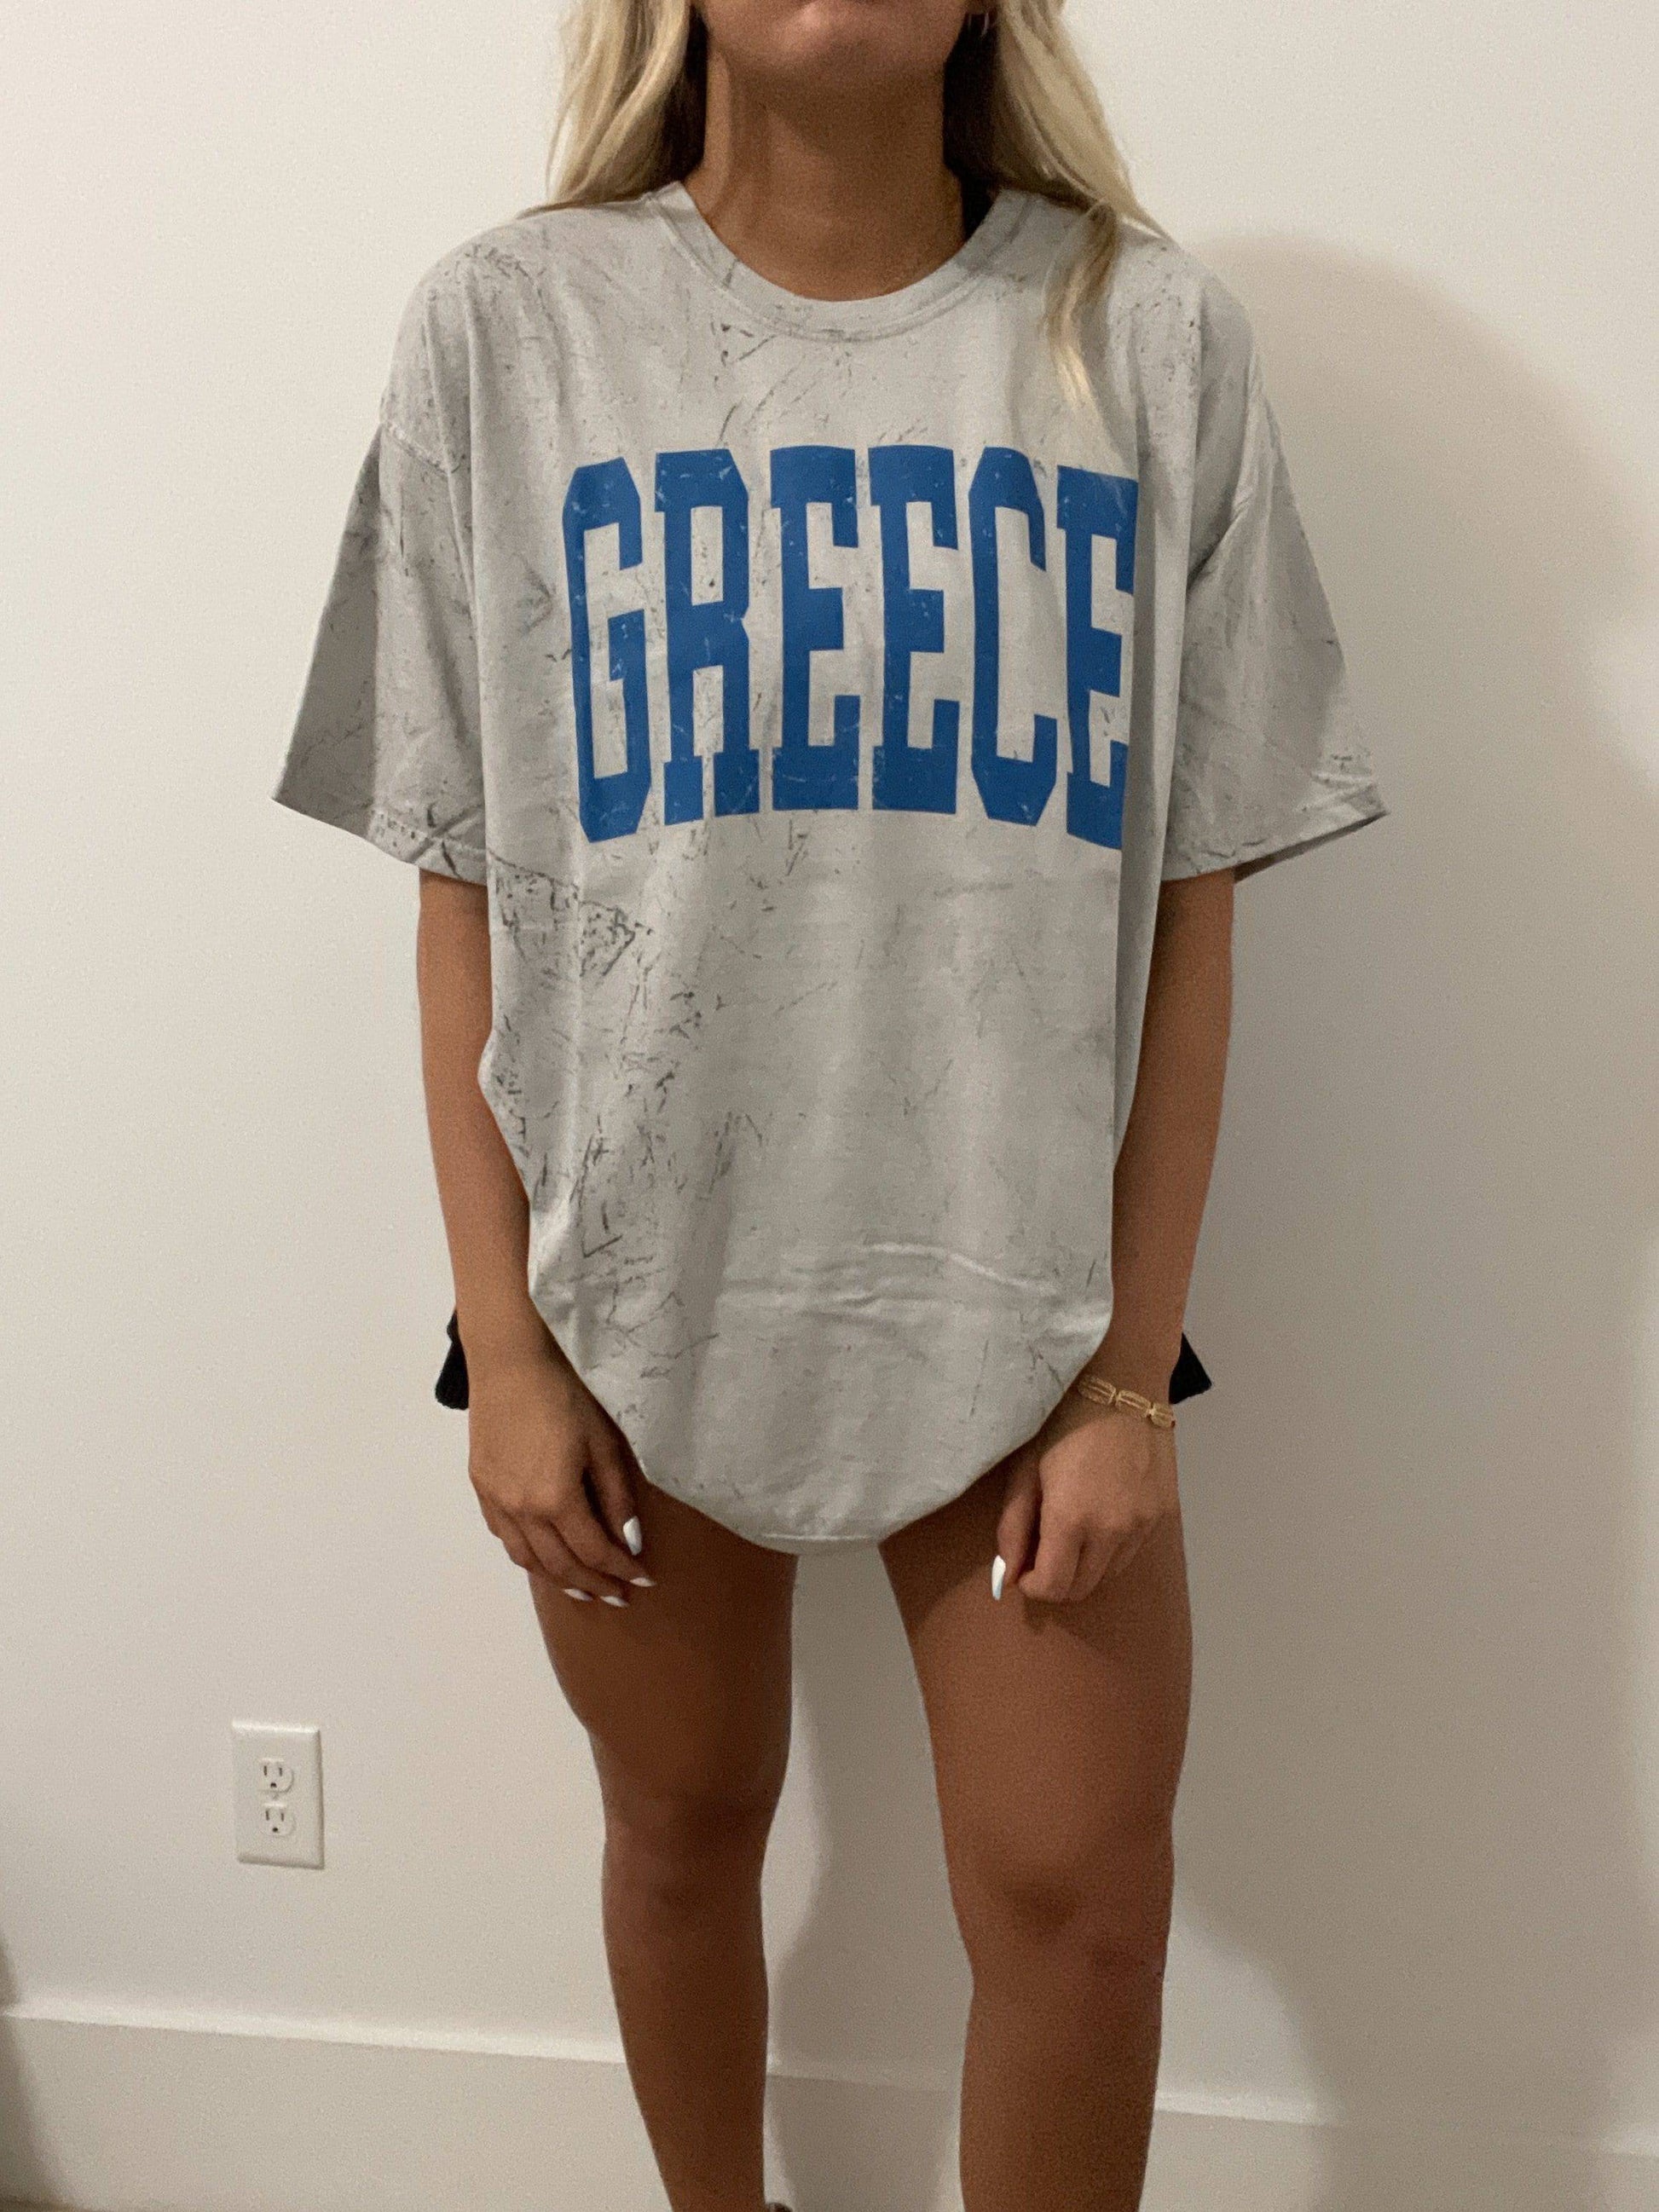 Greece Comfort Colors Shirt - JEWELS KENNEDY DESIGNS